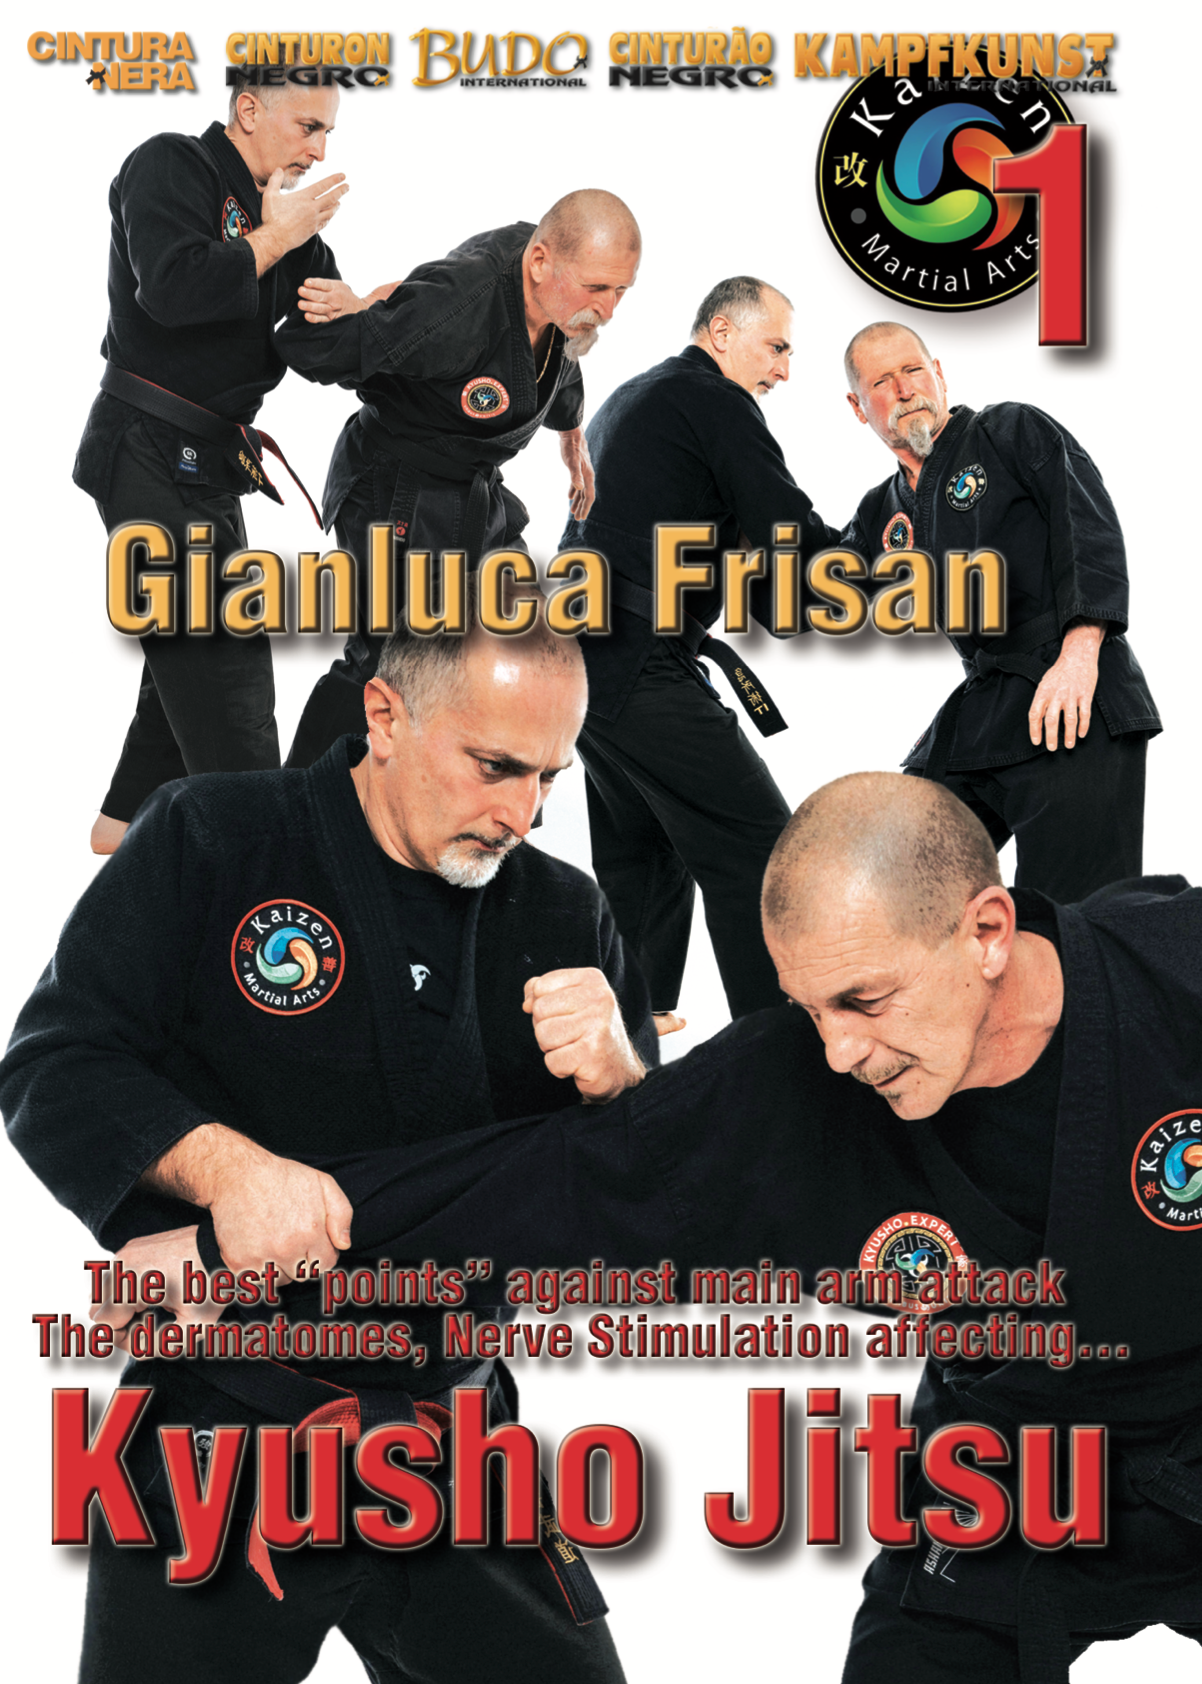 Mejor DVD 1 de estimulación nerviosa y ataques de brazos de Kyusho Jitsu con Gianluca Frisan